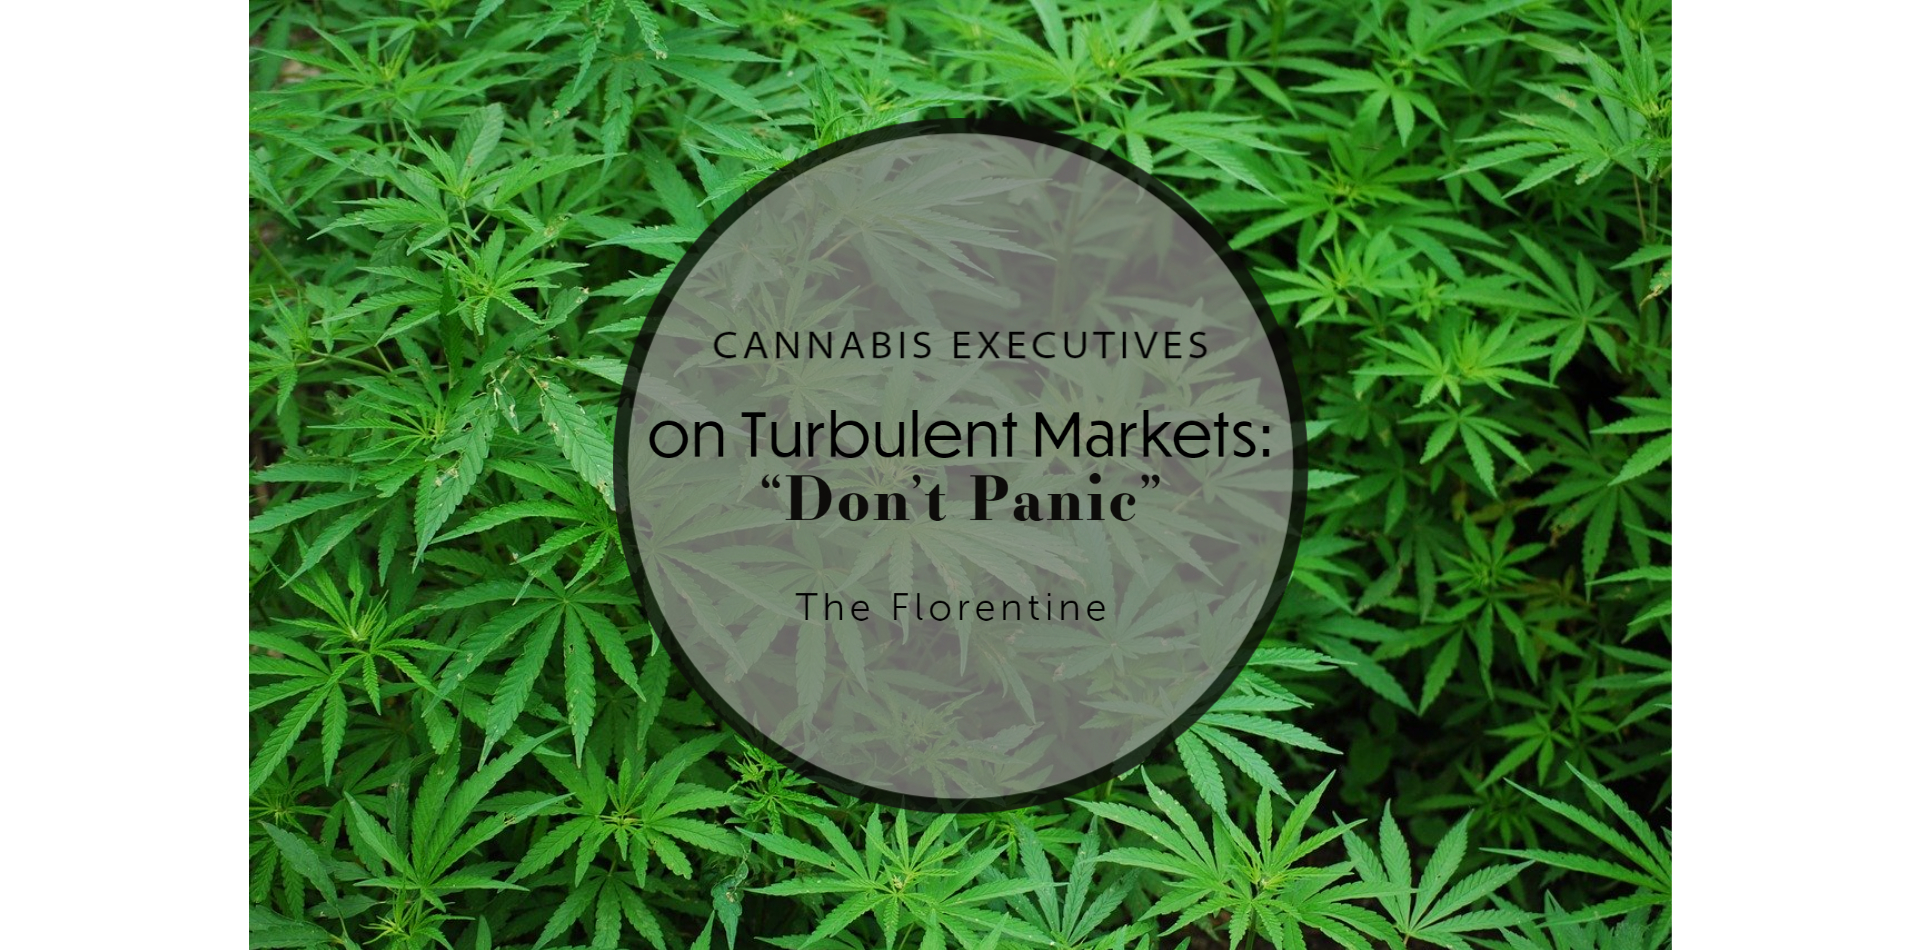 Cannabis Executives on Turbulent Markets: “Don’t Panic”